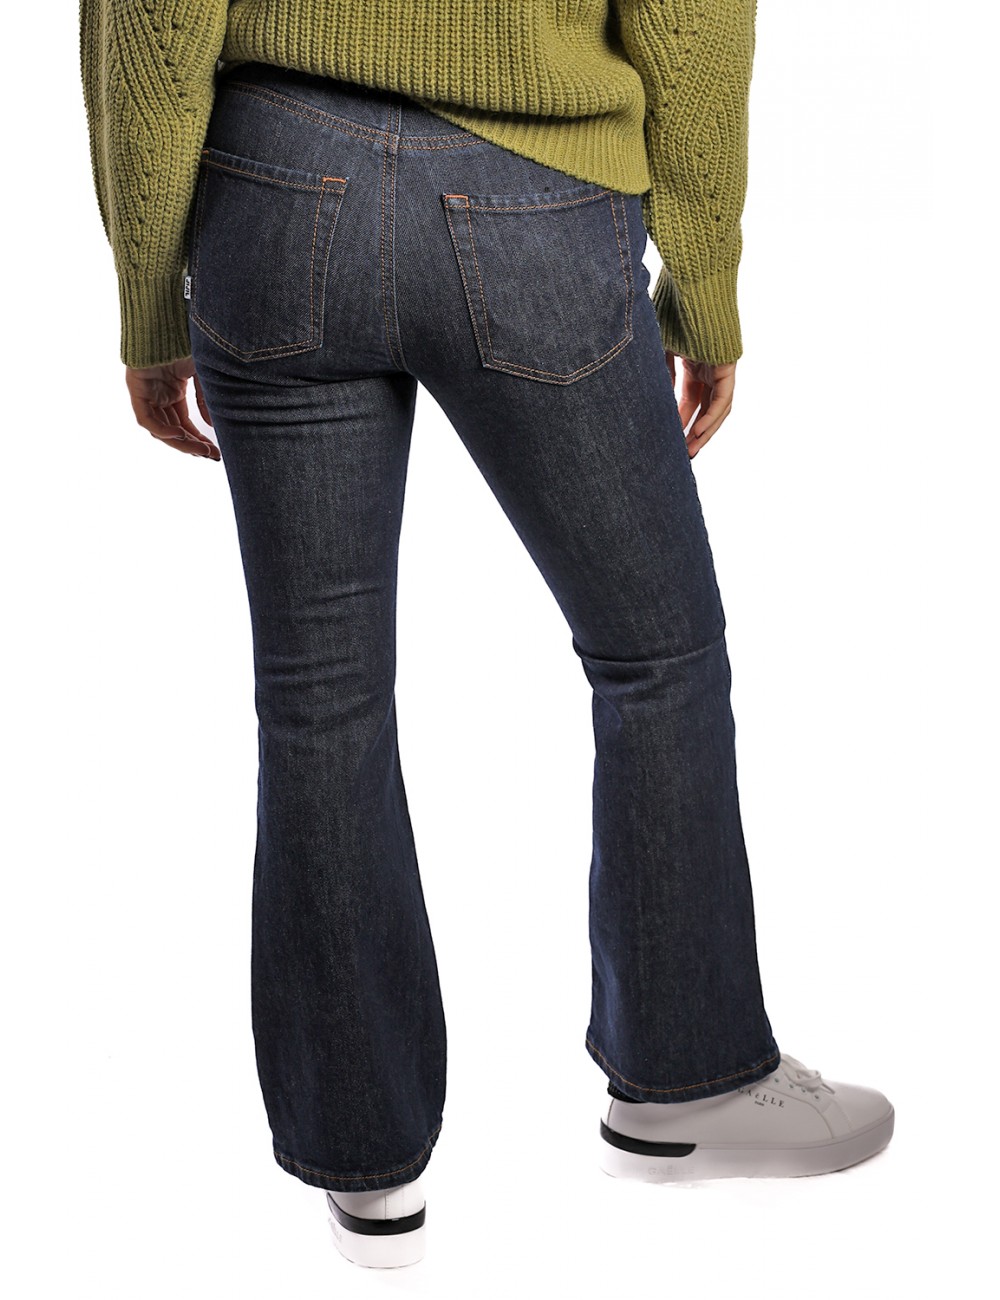 jeans jijil DONNA DENIM BLU - JPI23PJ052 vista frontale indossato